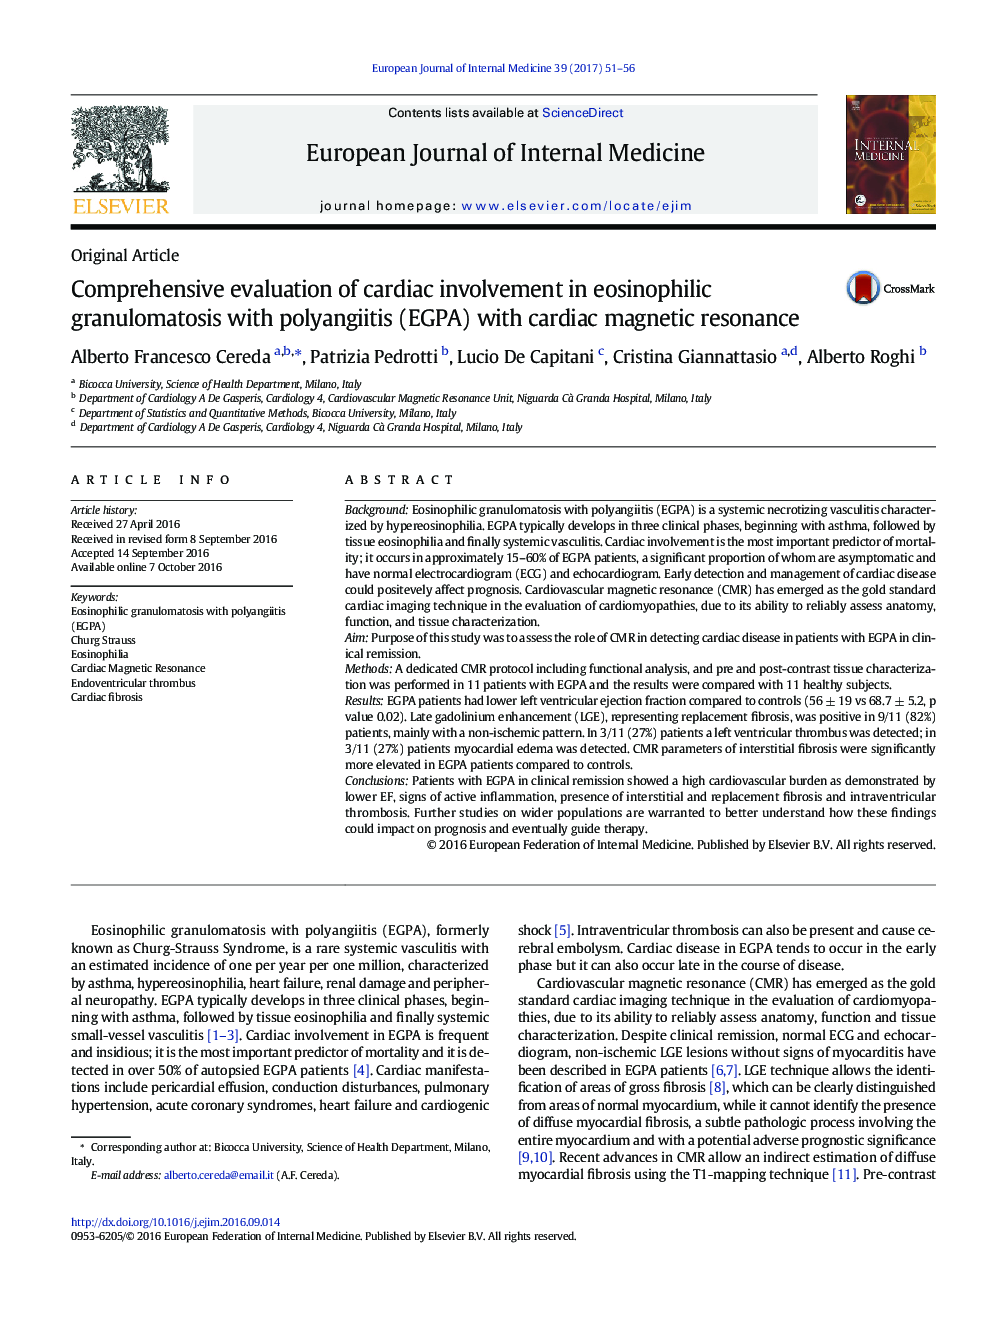 Comprehensive evaluation of cardiac involvement in eosinophilic granulomatosis with polyangiitis (EGPA) with cardiac magnetic resonance